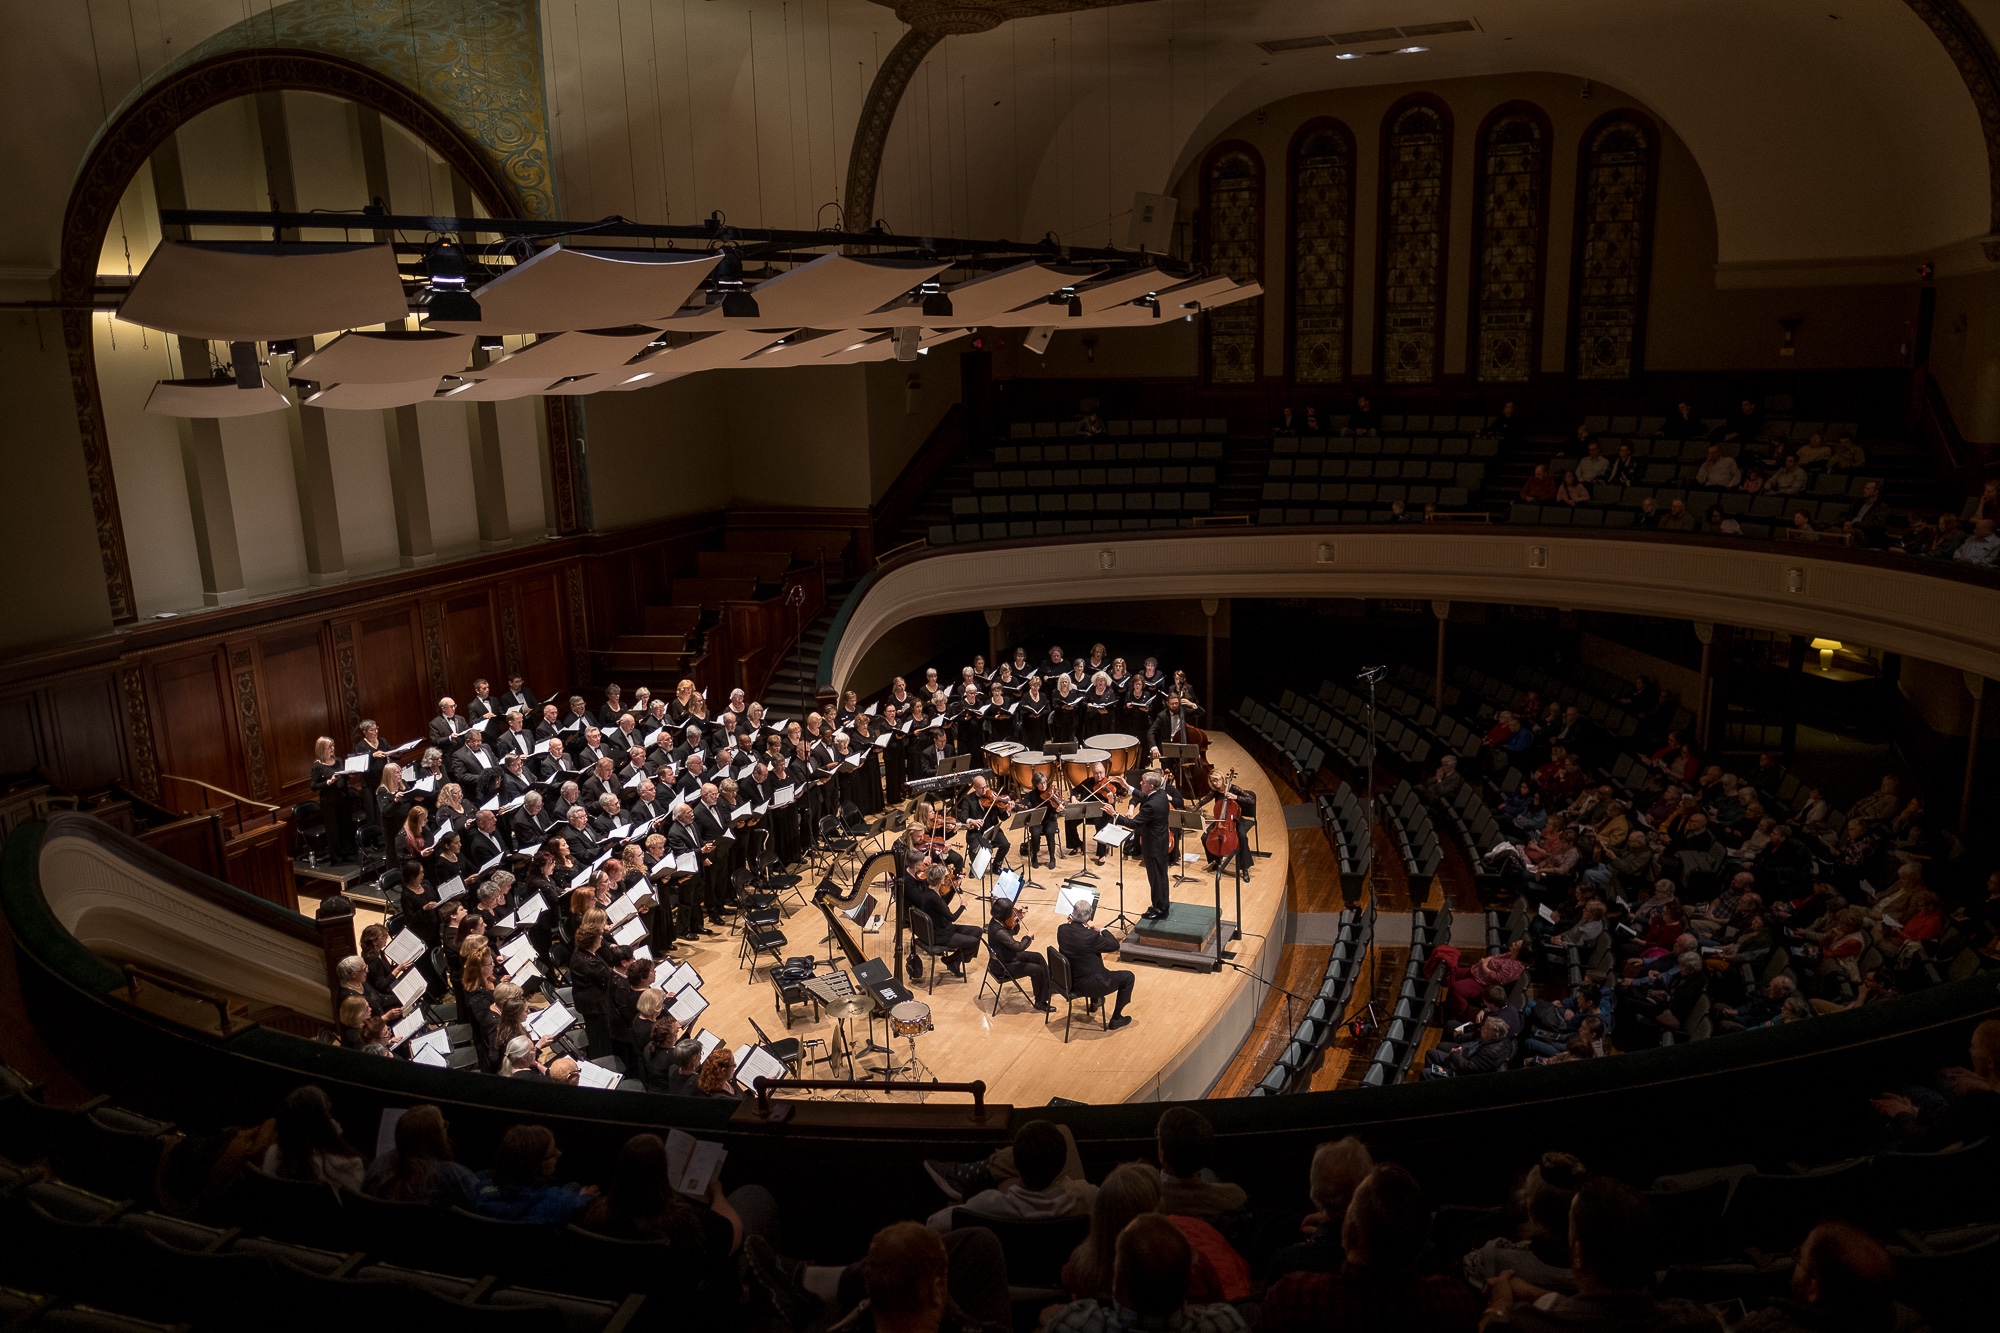 Rochester Oratorio Society to Perform “Twelfth Night” World Premiere